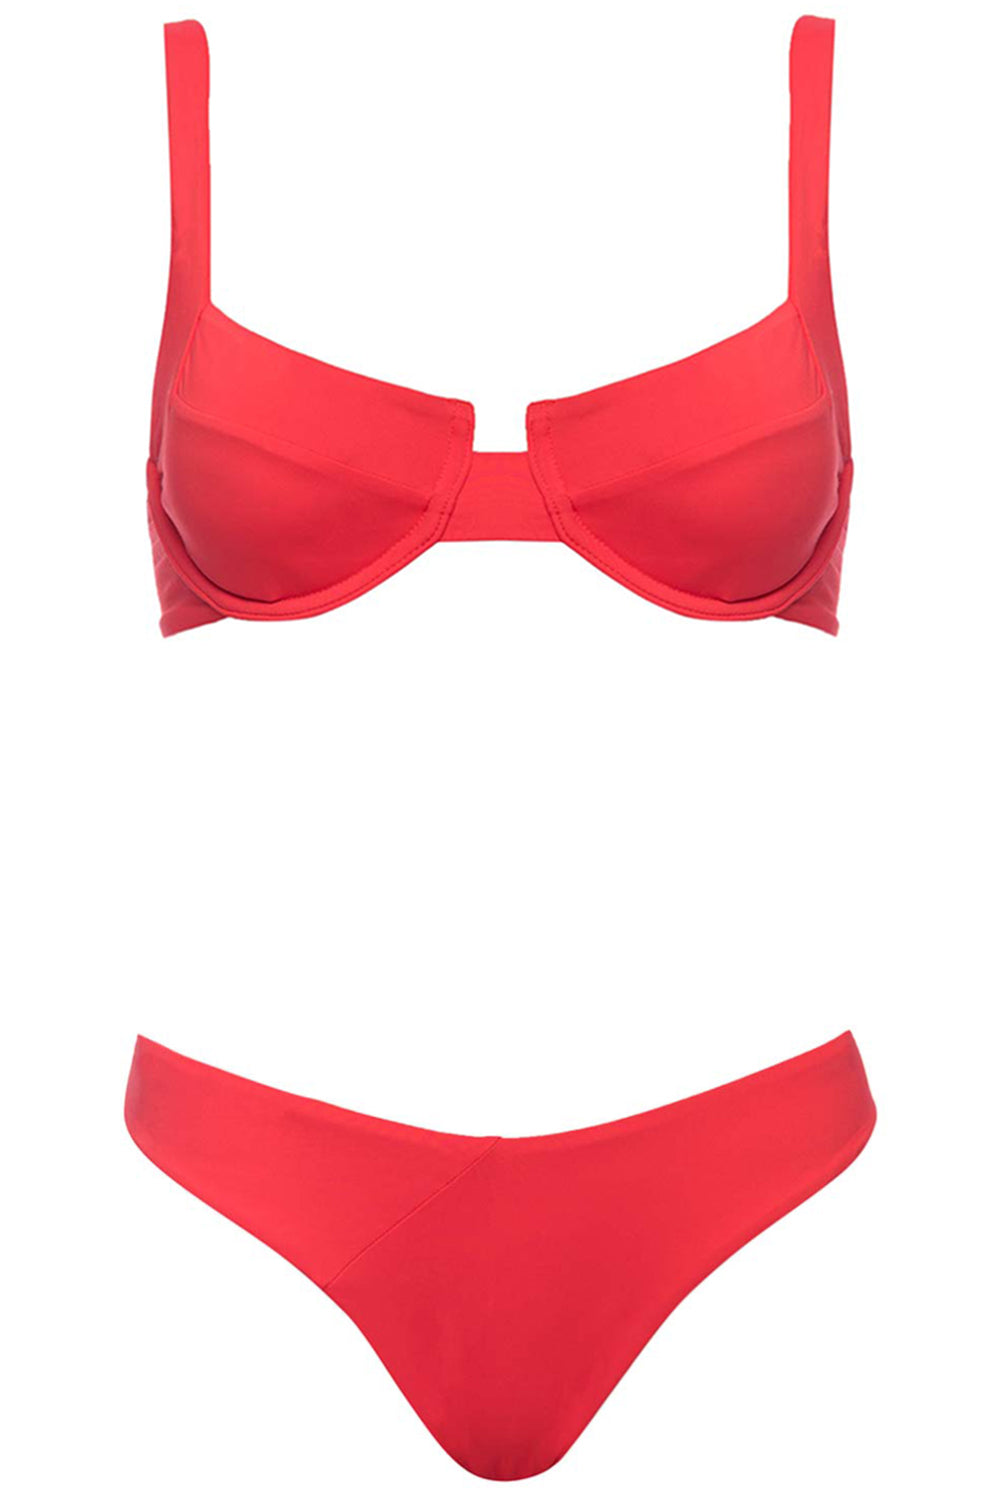 Laguna Bikini Red Set